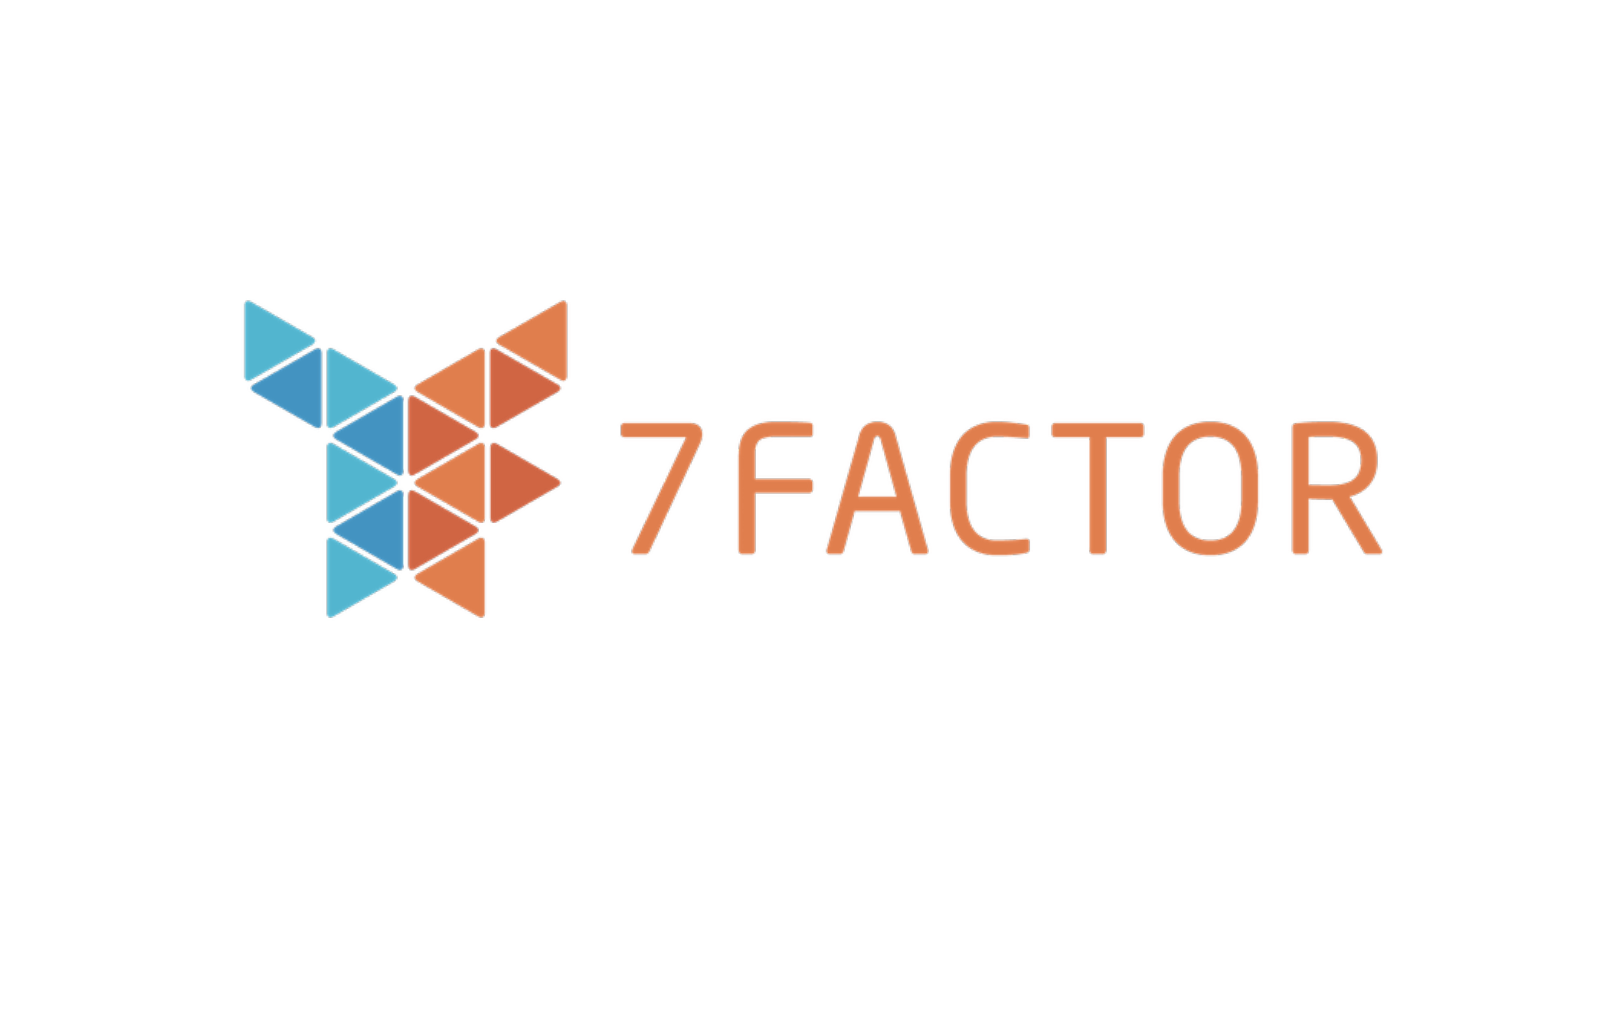 7Factor